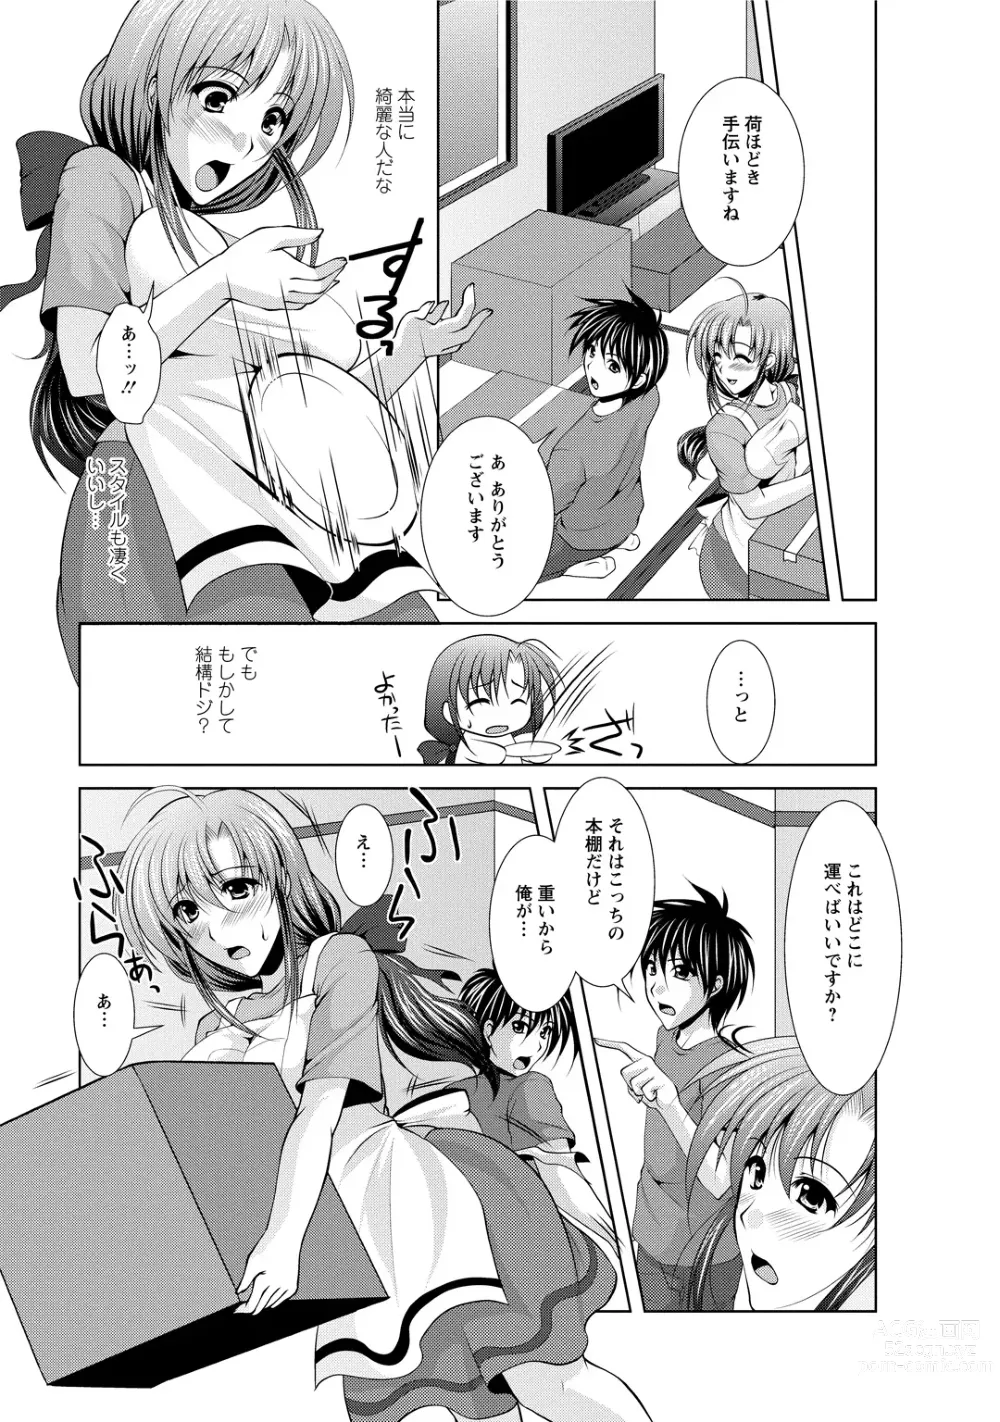 Page 11 of manga Tonatsumaa v01